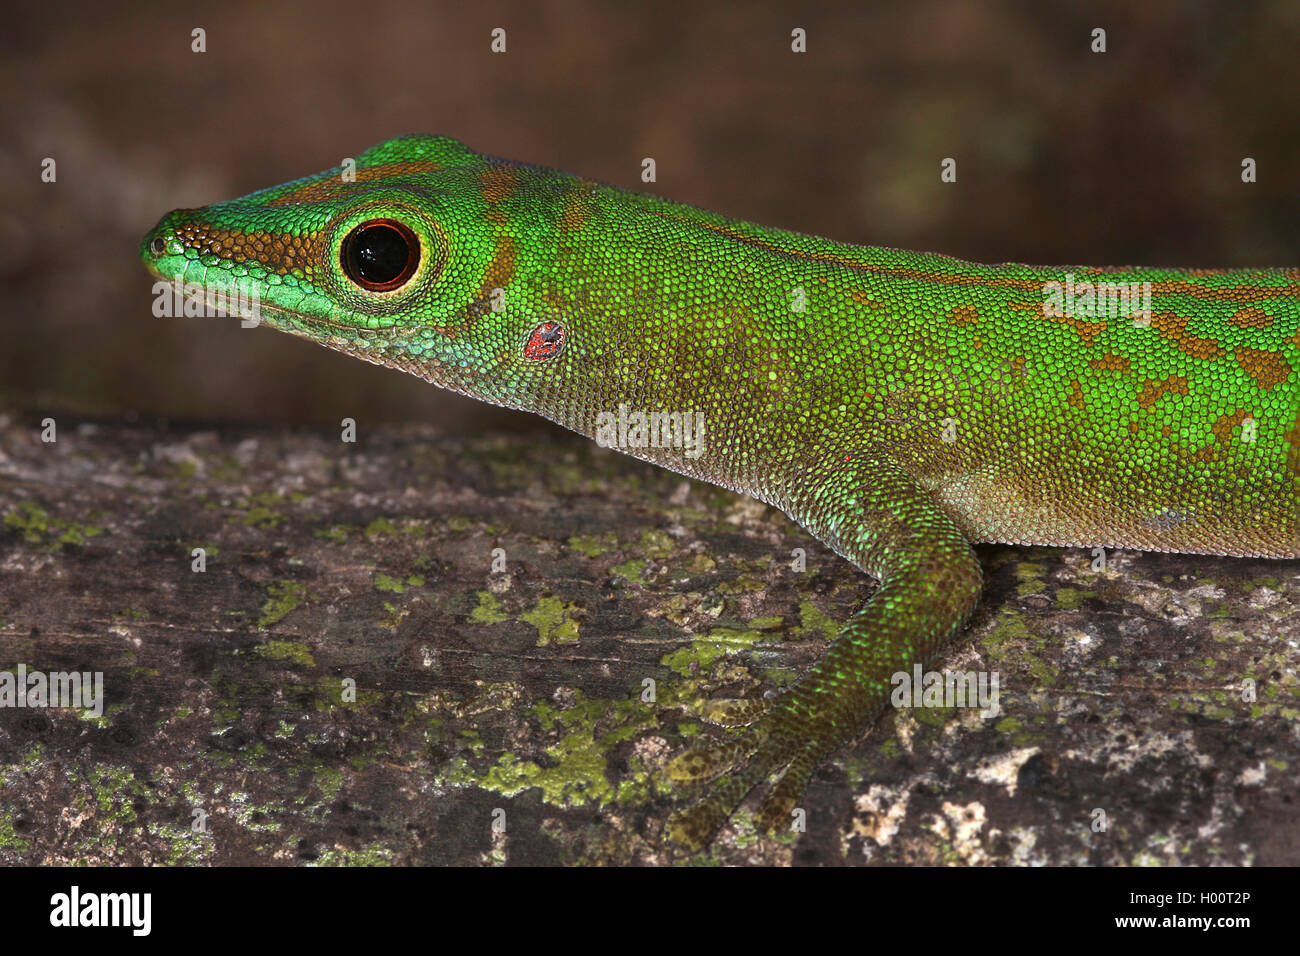 Green Day Gecko (Phelsuma astriata), Retrato, Seychelles Foto de stock